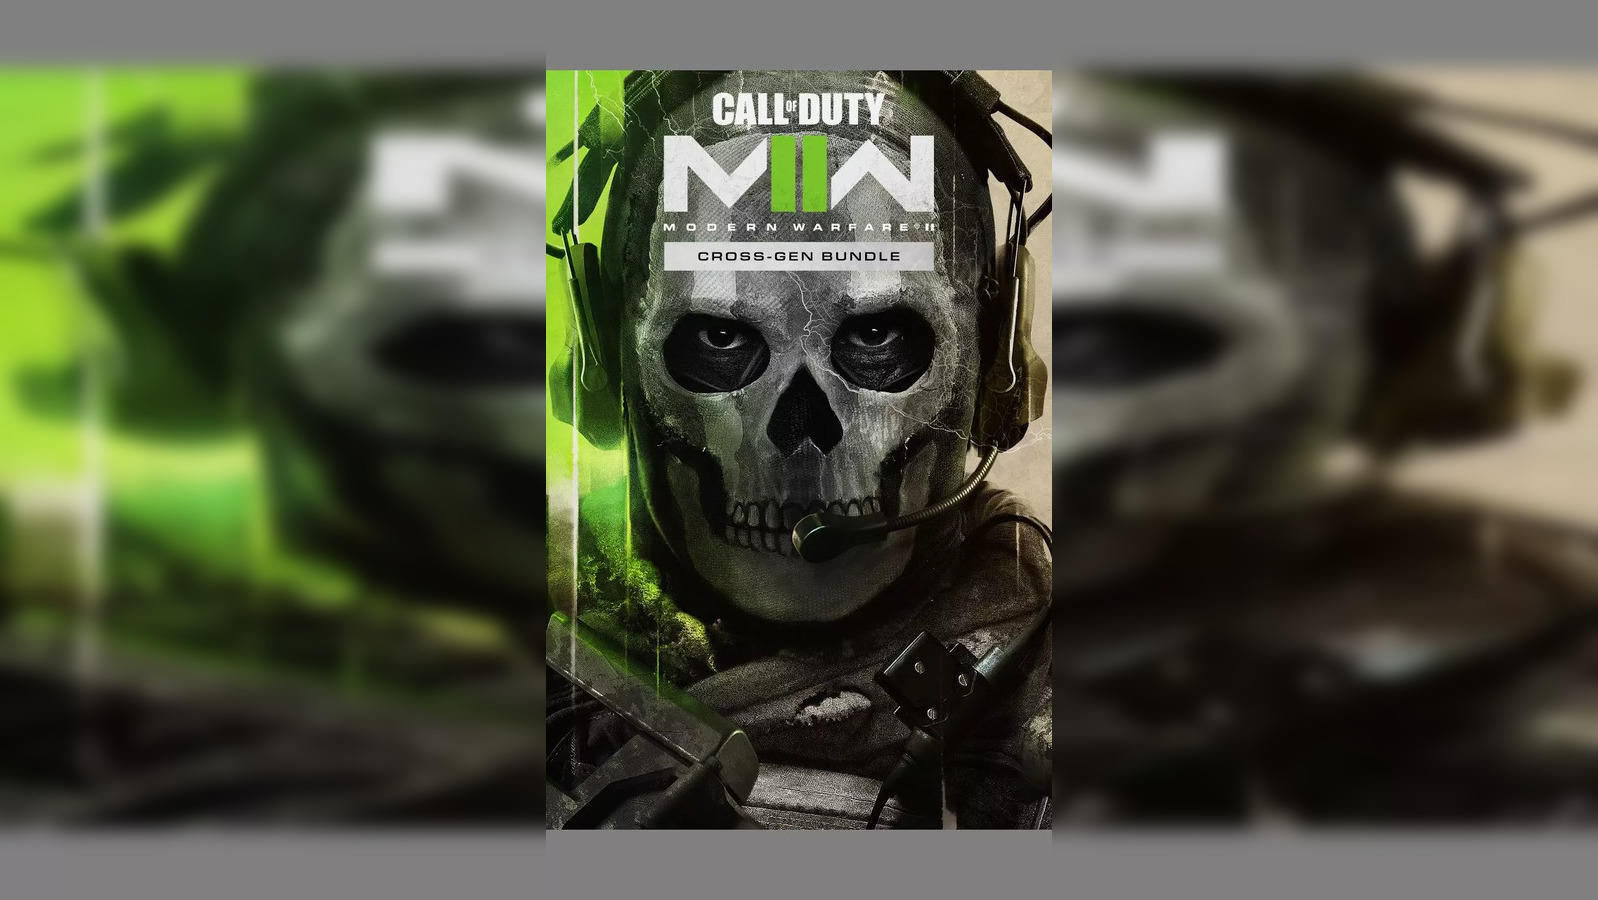 Call of Duty®: Next: Call of Duty®: Modern Warfare® II Multiplayer